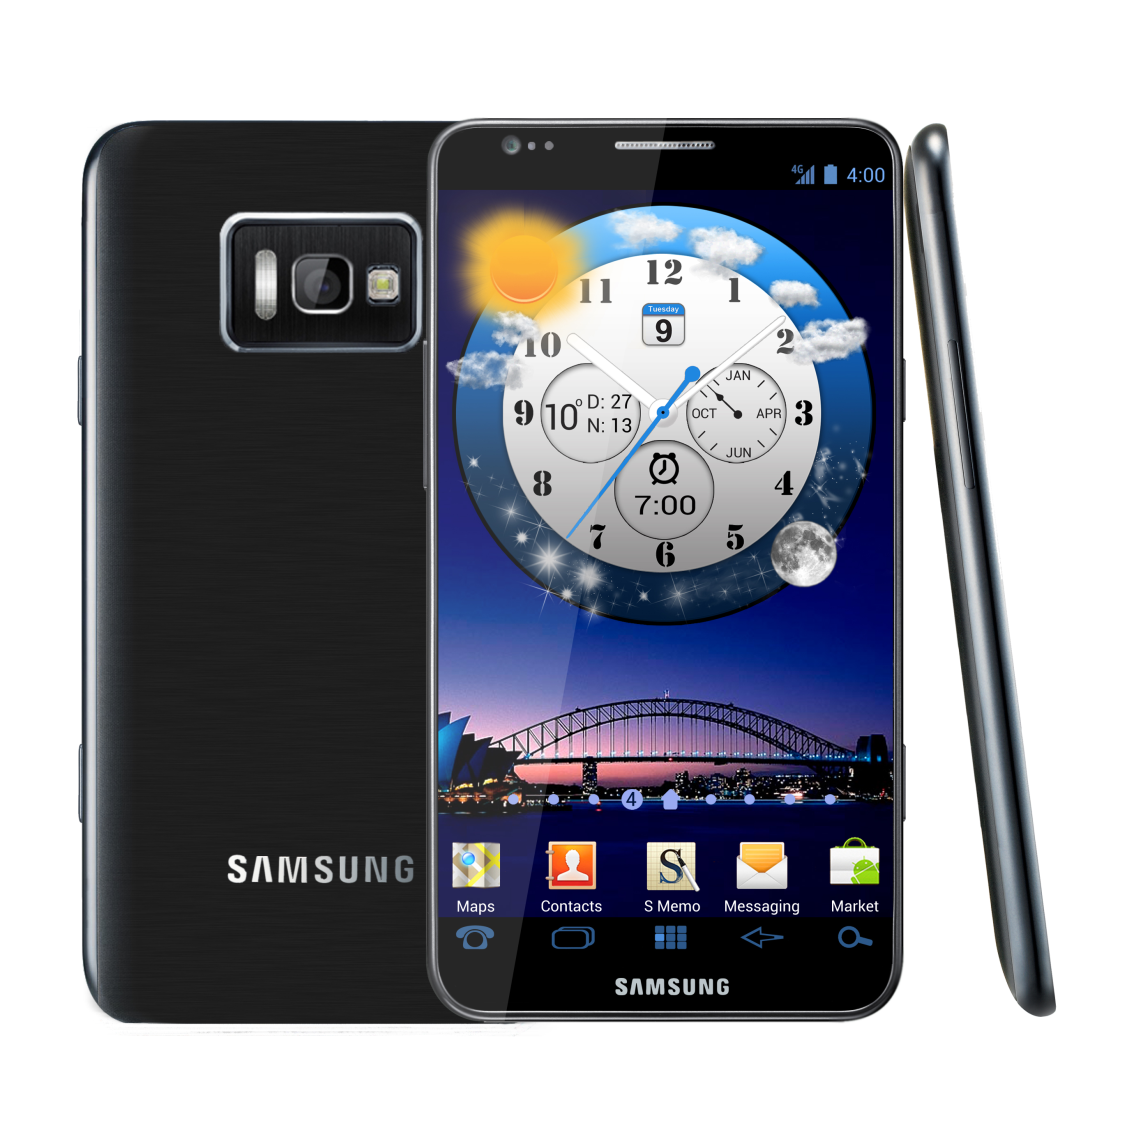 spesifikasi samsung galaxy S III, handphone android galaxy s 3 quad core, smartphone super 2012